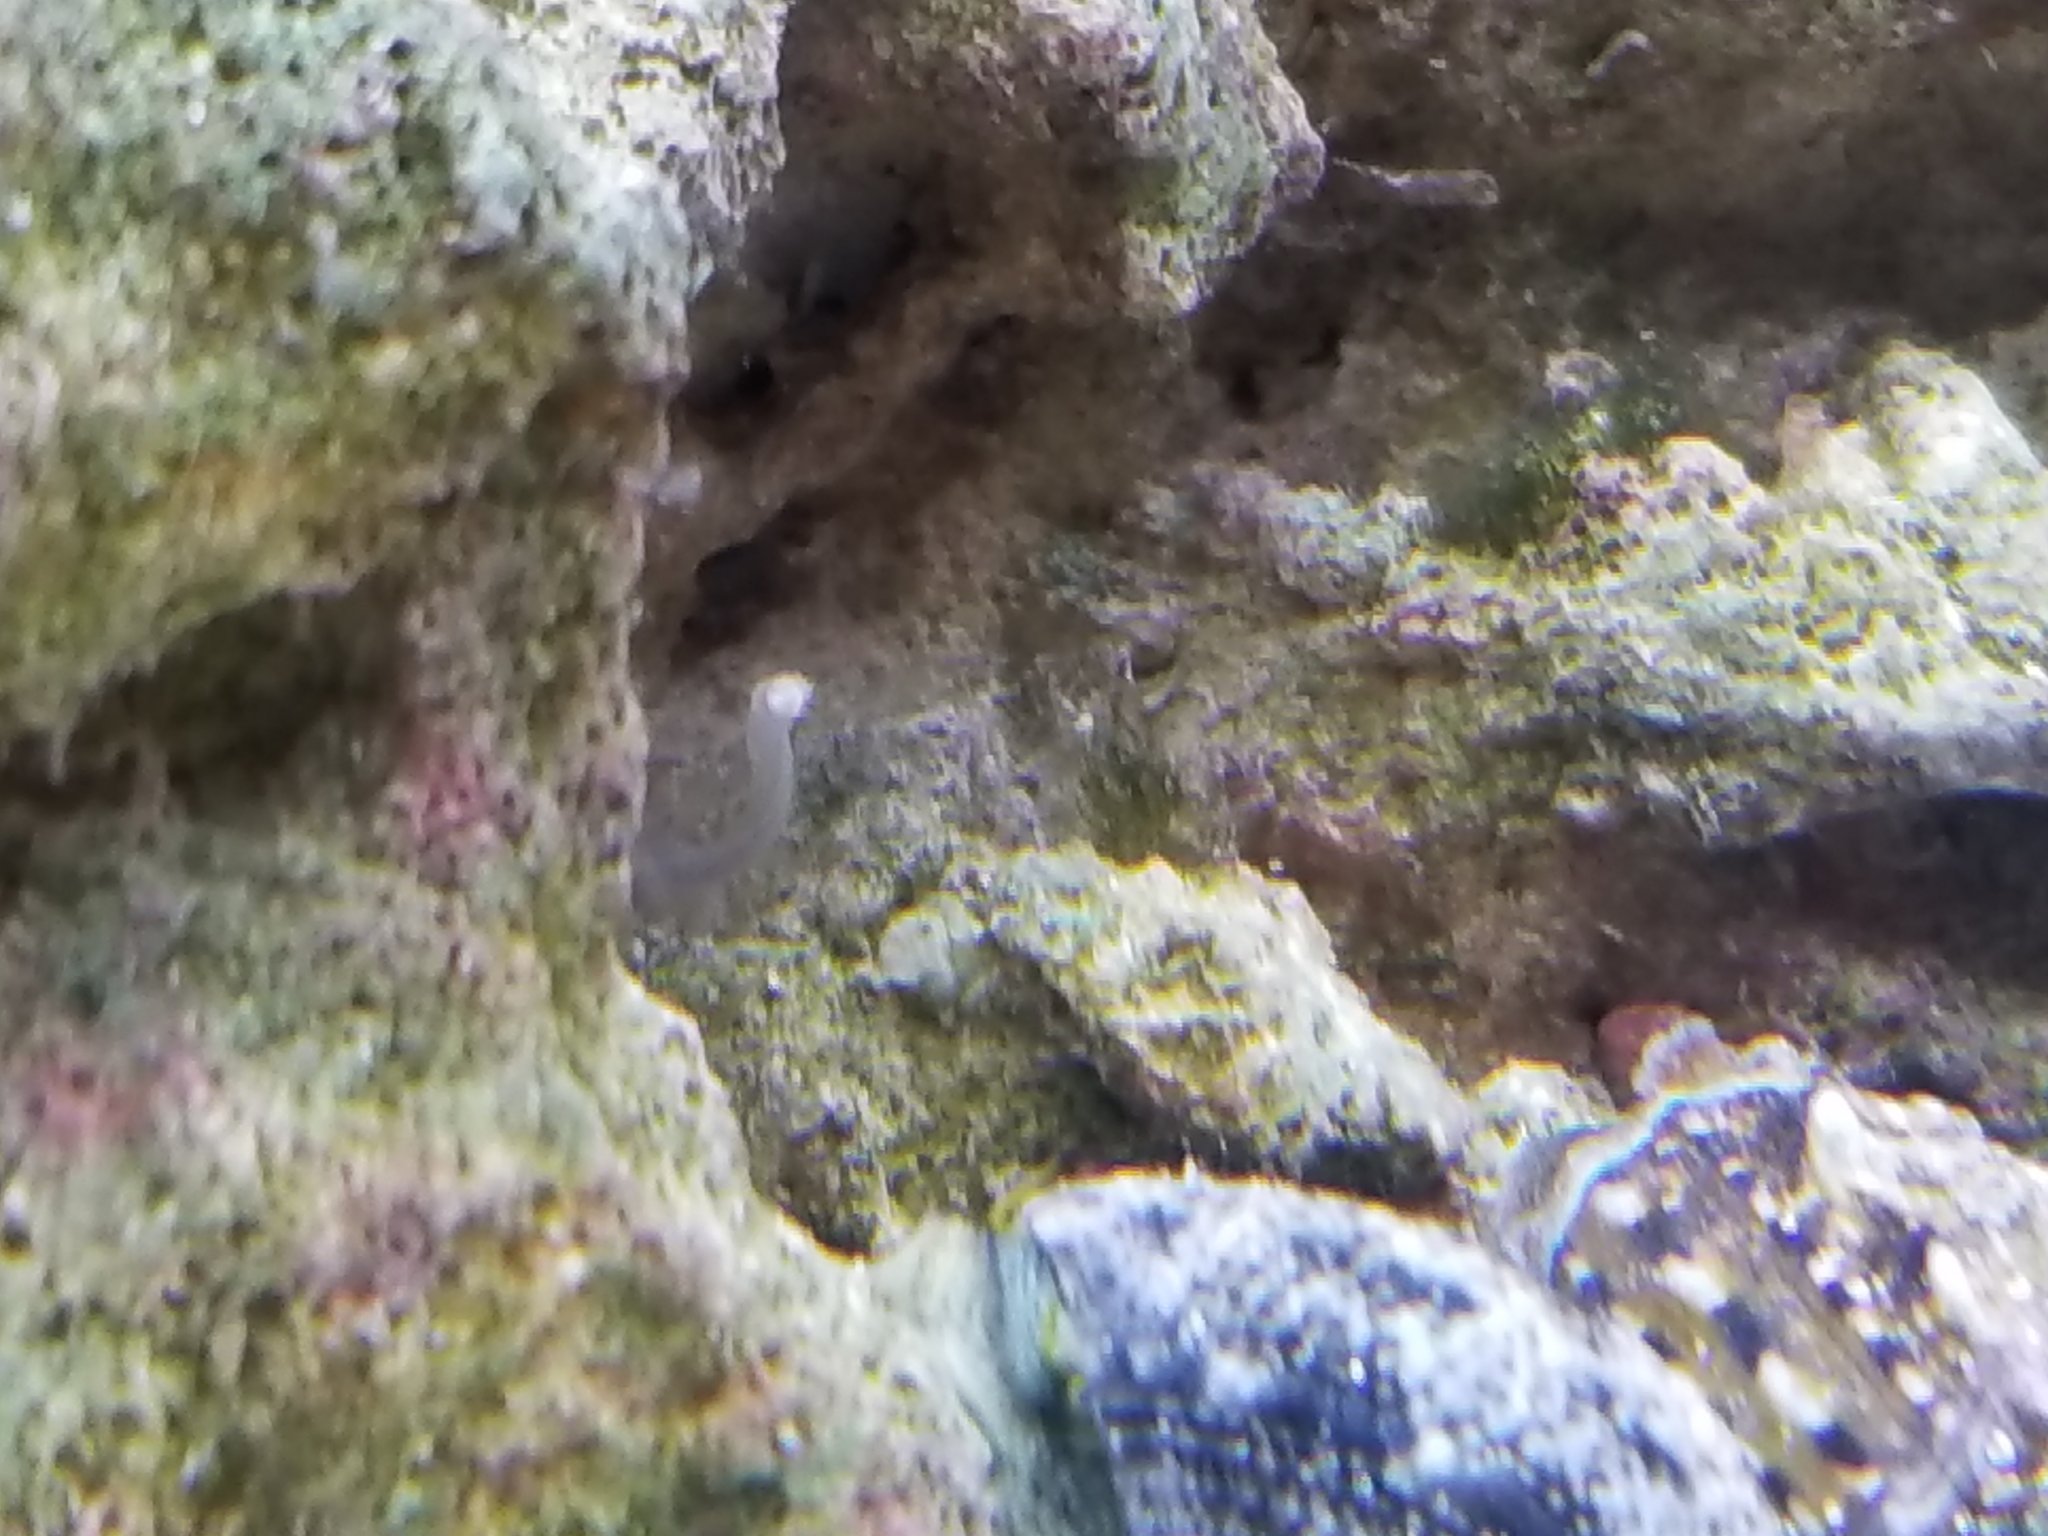 White tube worm/growth